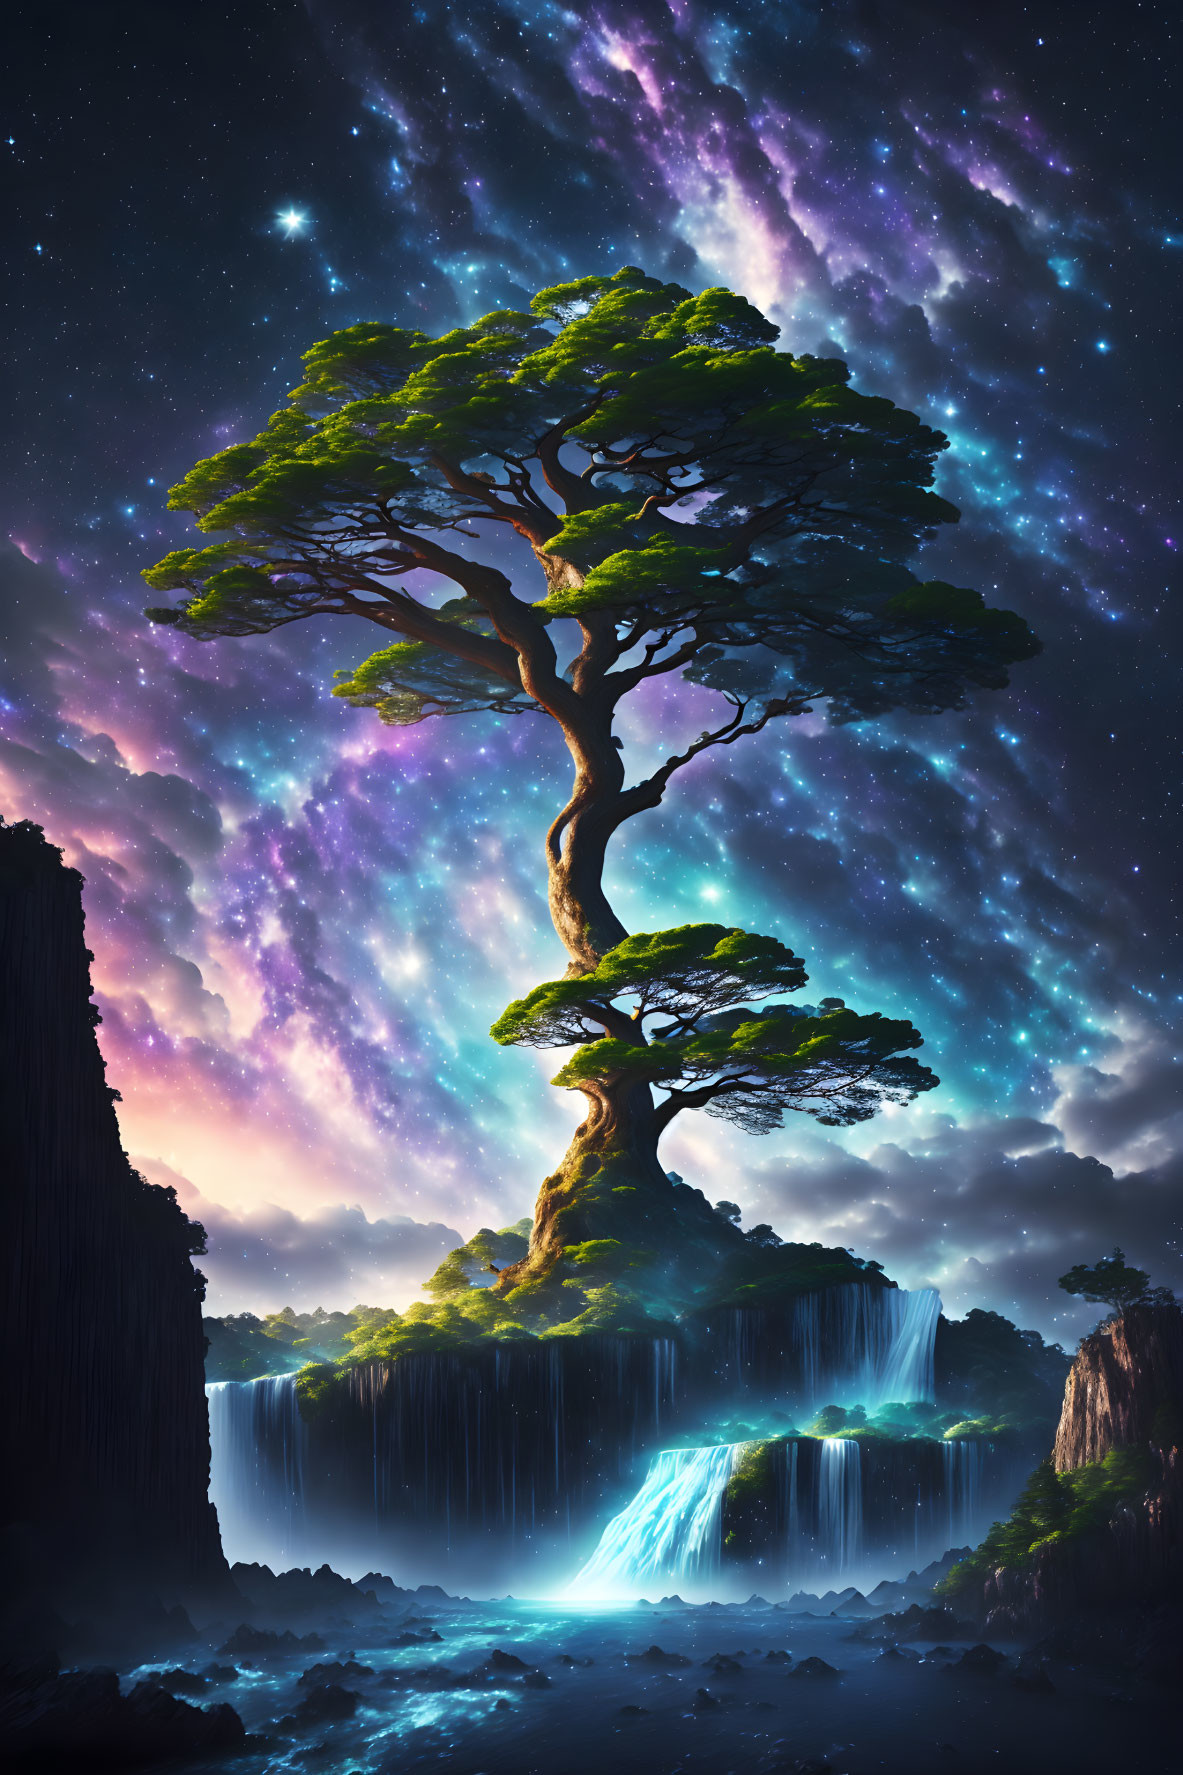 Majestic tree on waterfall under starry night sky